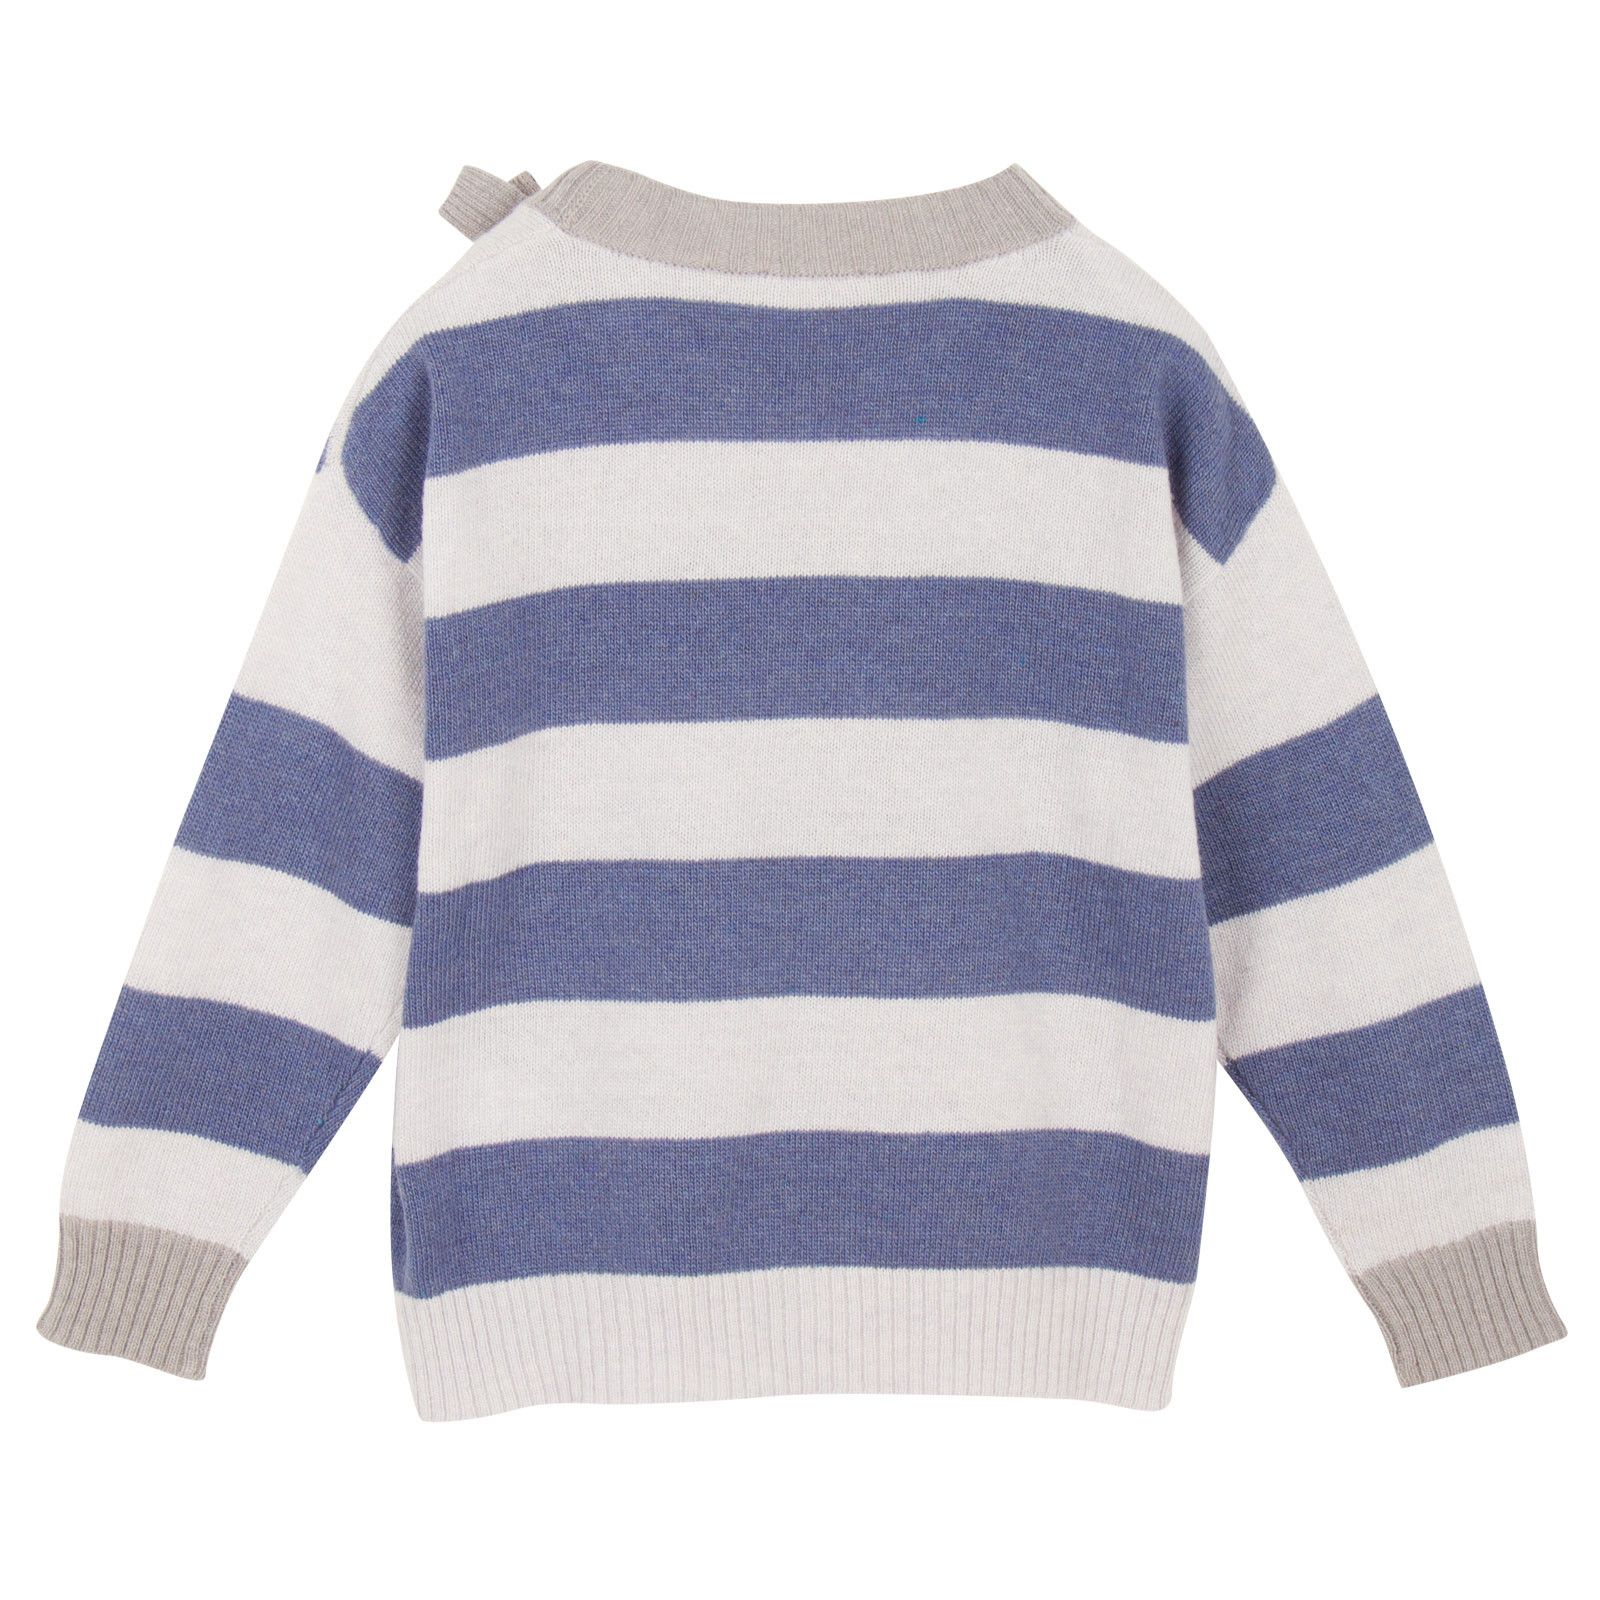 Girls Grey&Blue Stripe Sweater With Fancy Bow - CÉMAROSE | Children's Fashion Store - 2